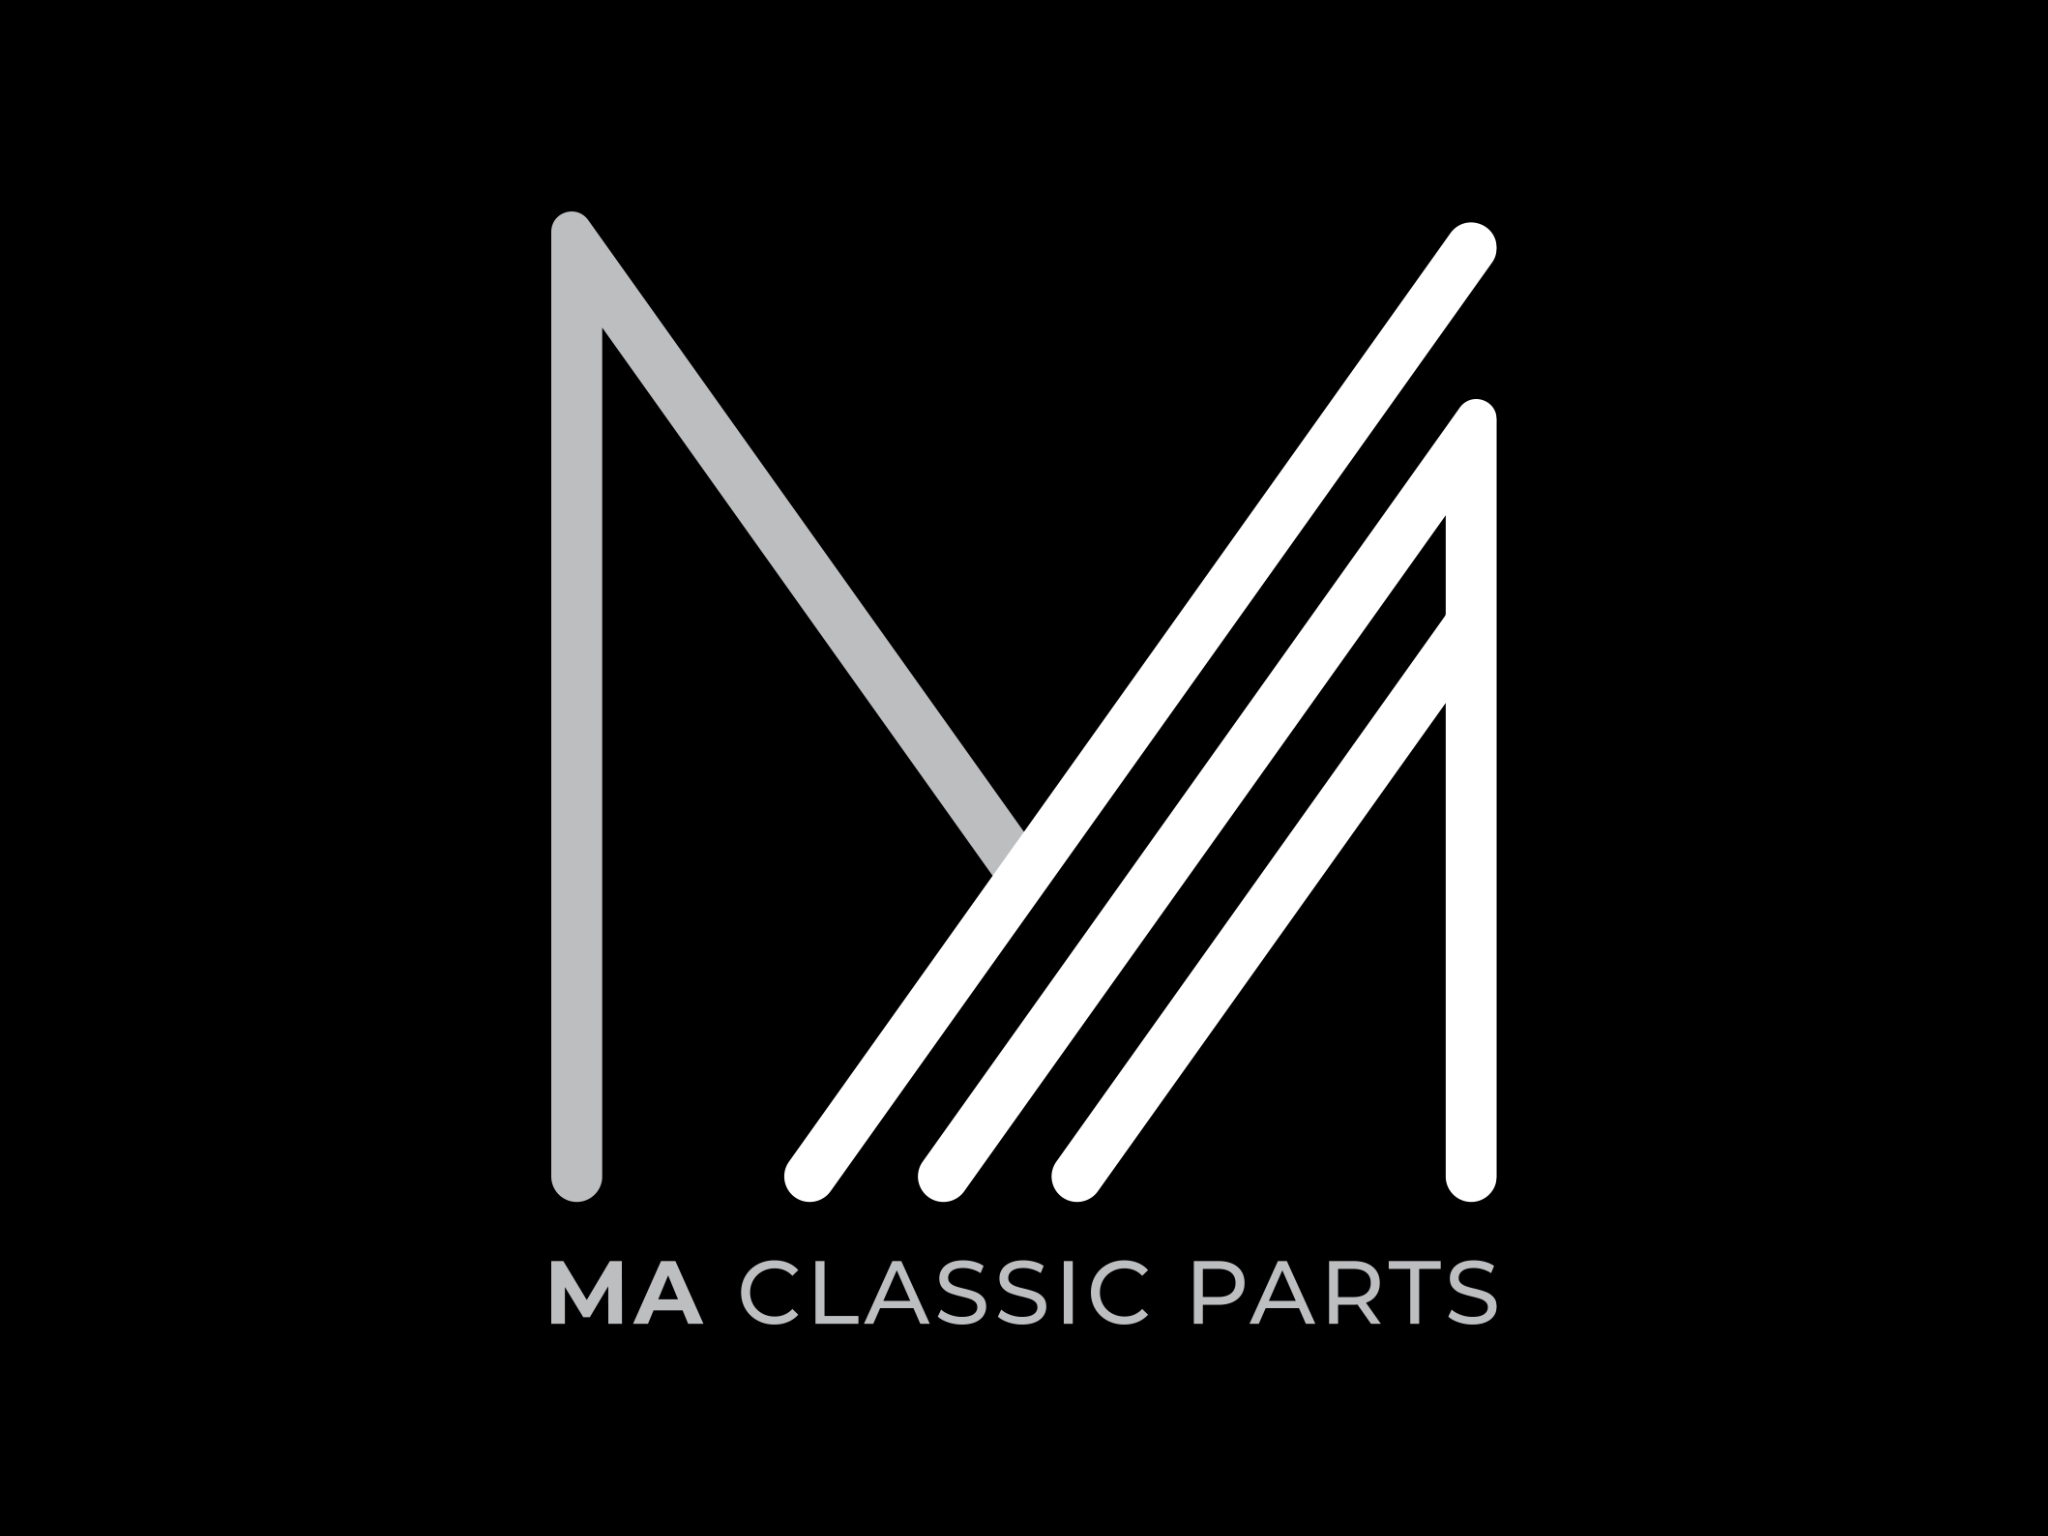 MA Classic Parts